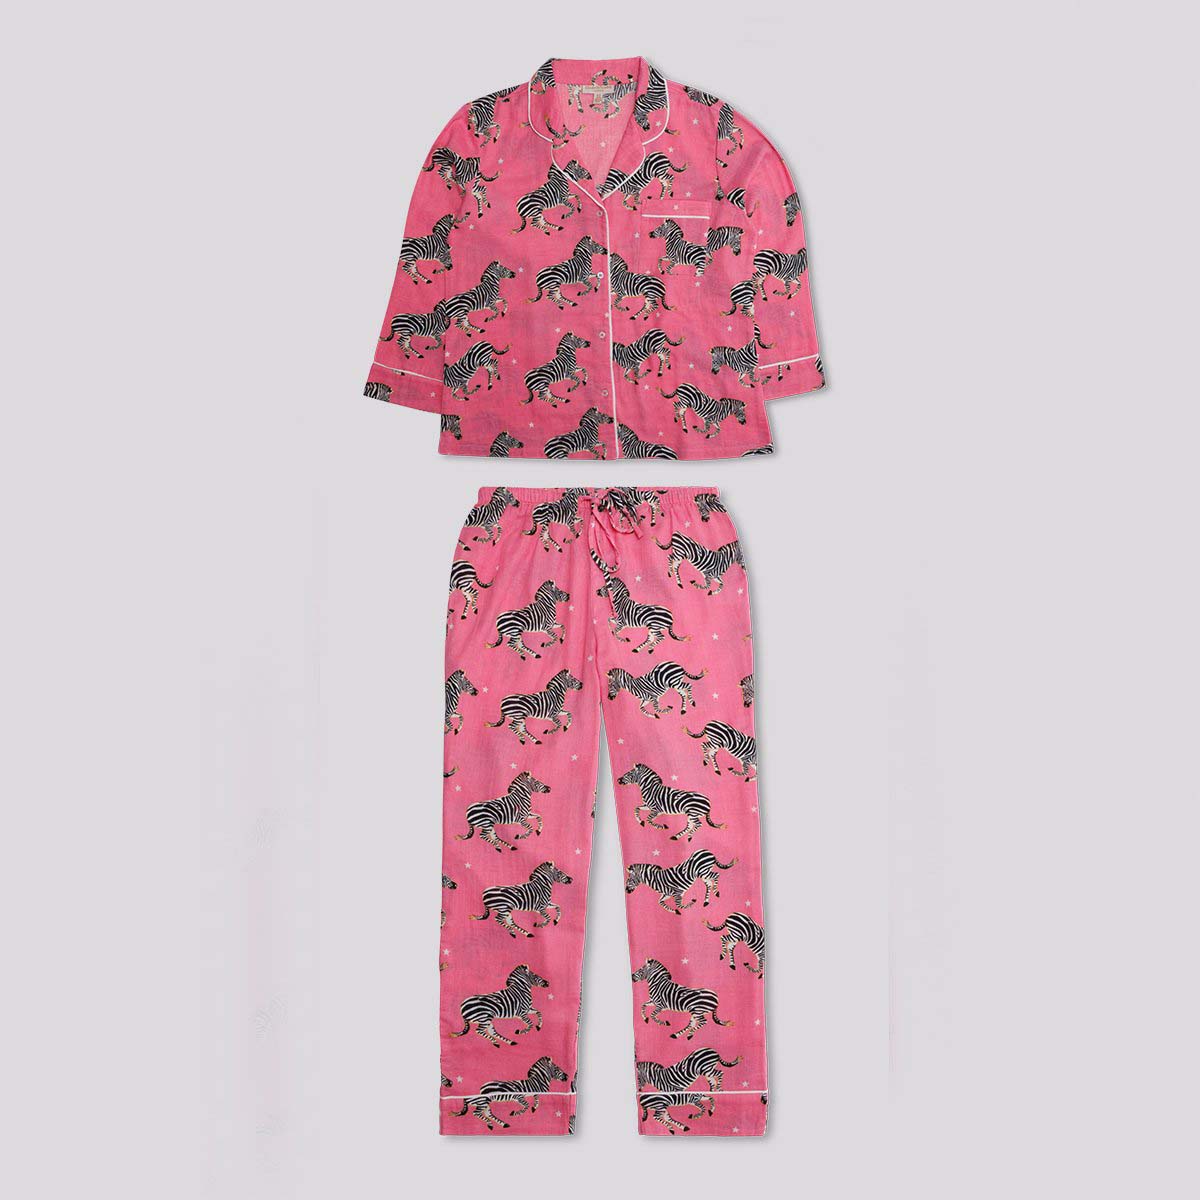 Zebra Pyjamas